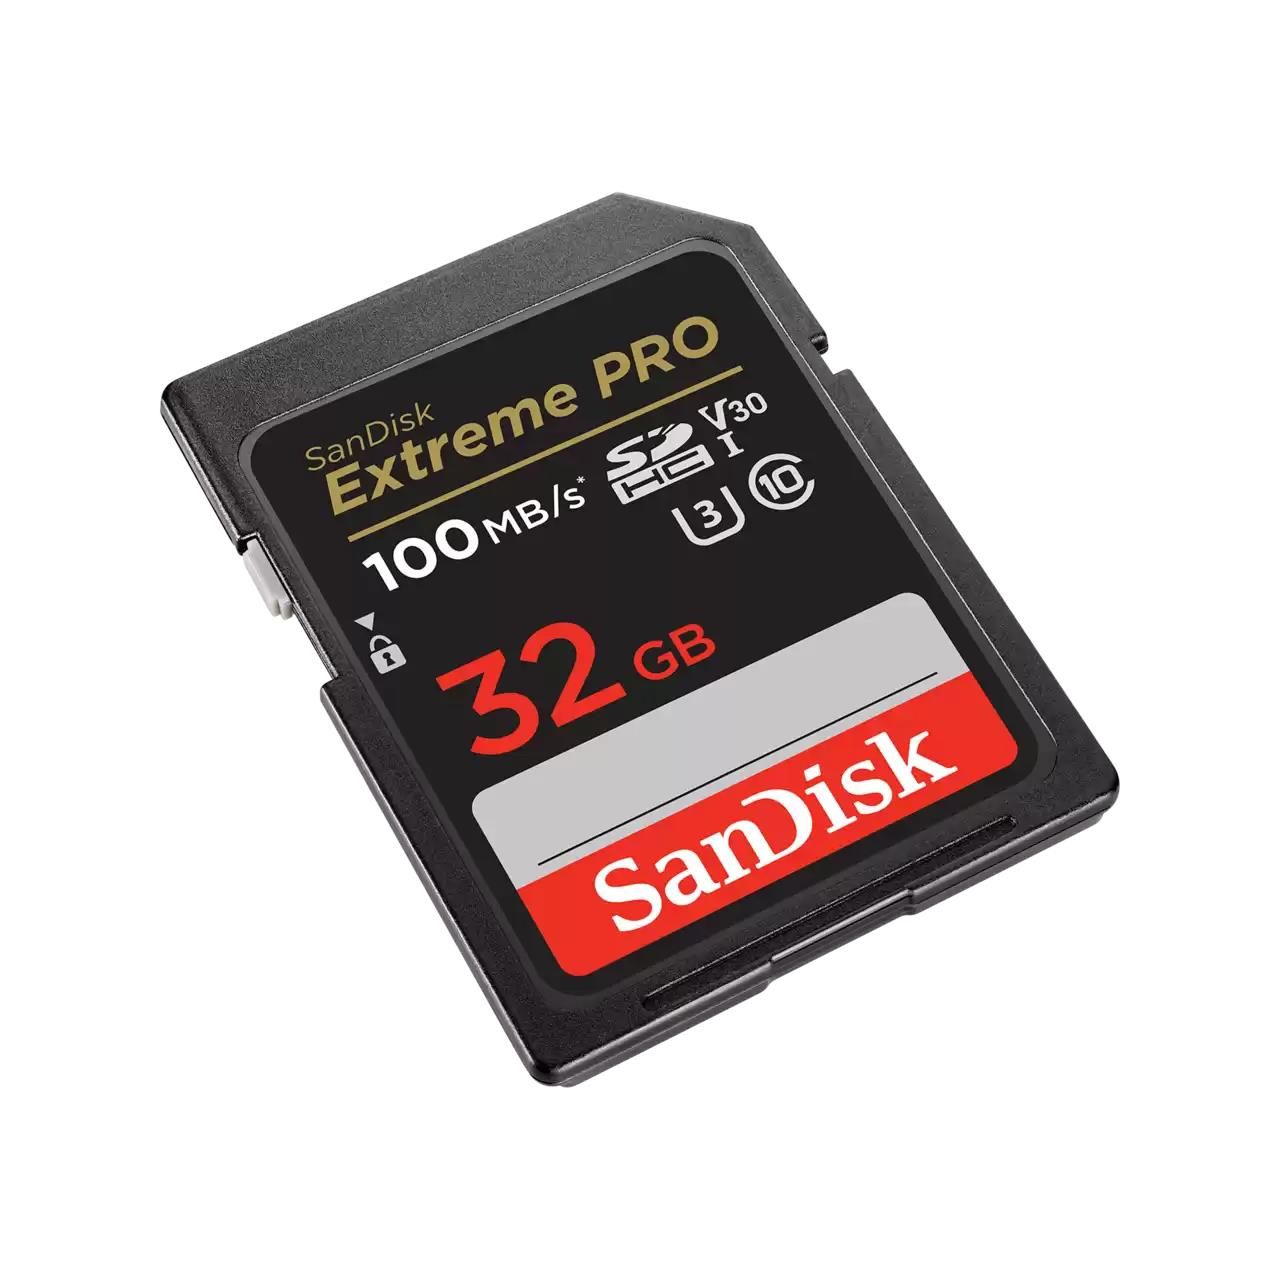 SanDisk Extreme PRO 32